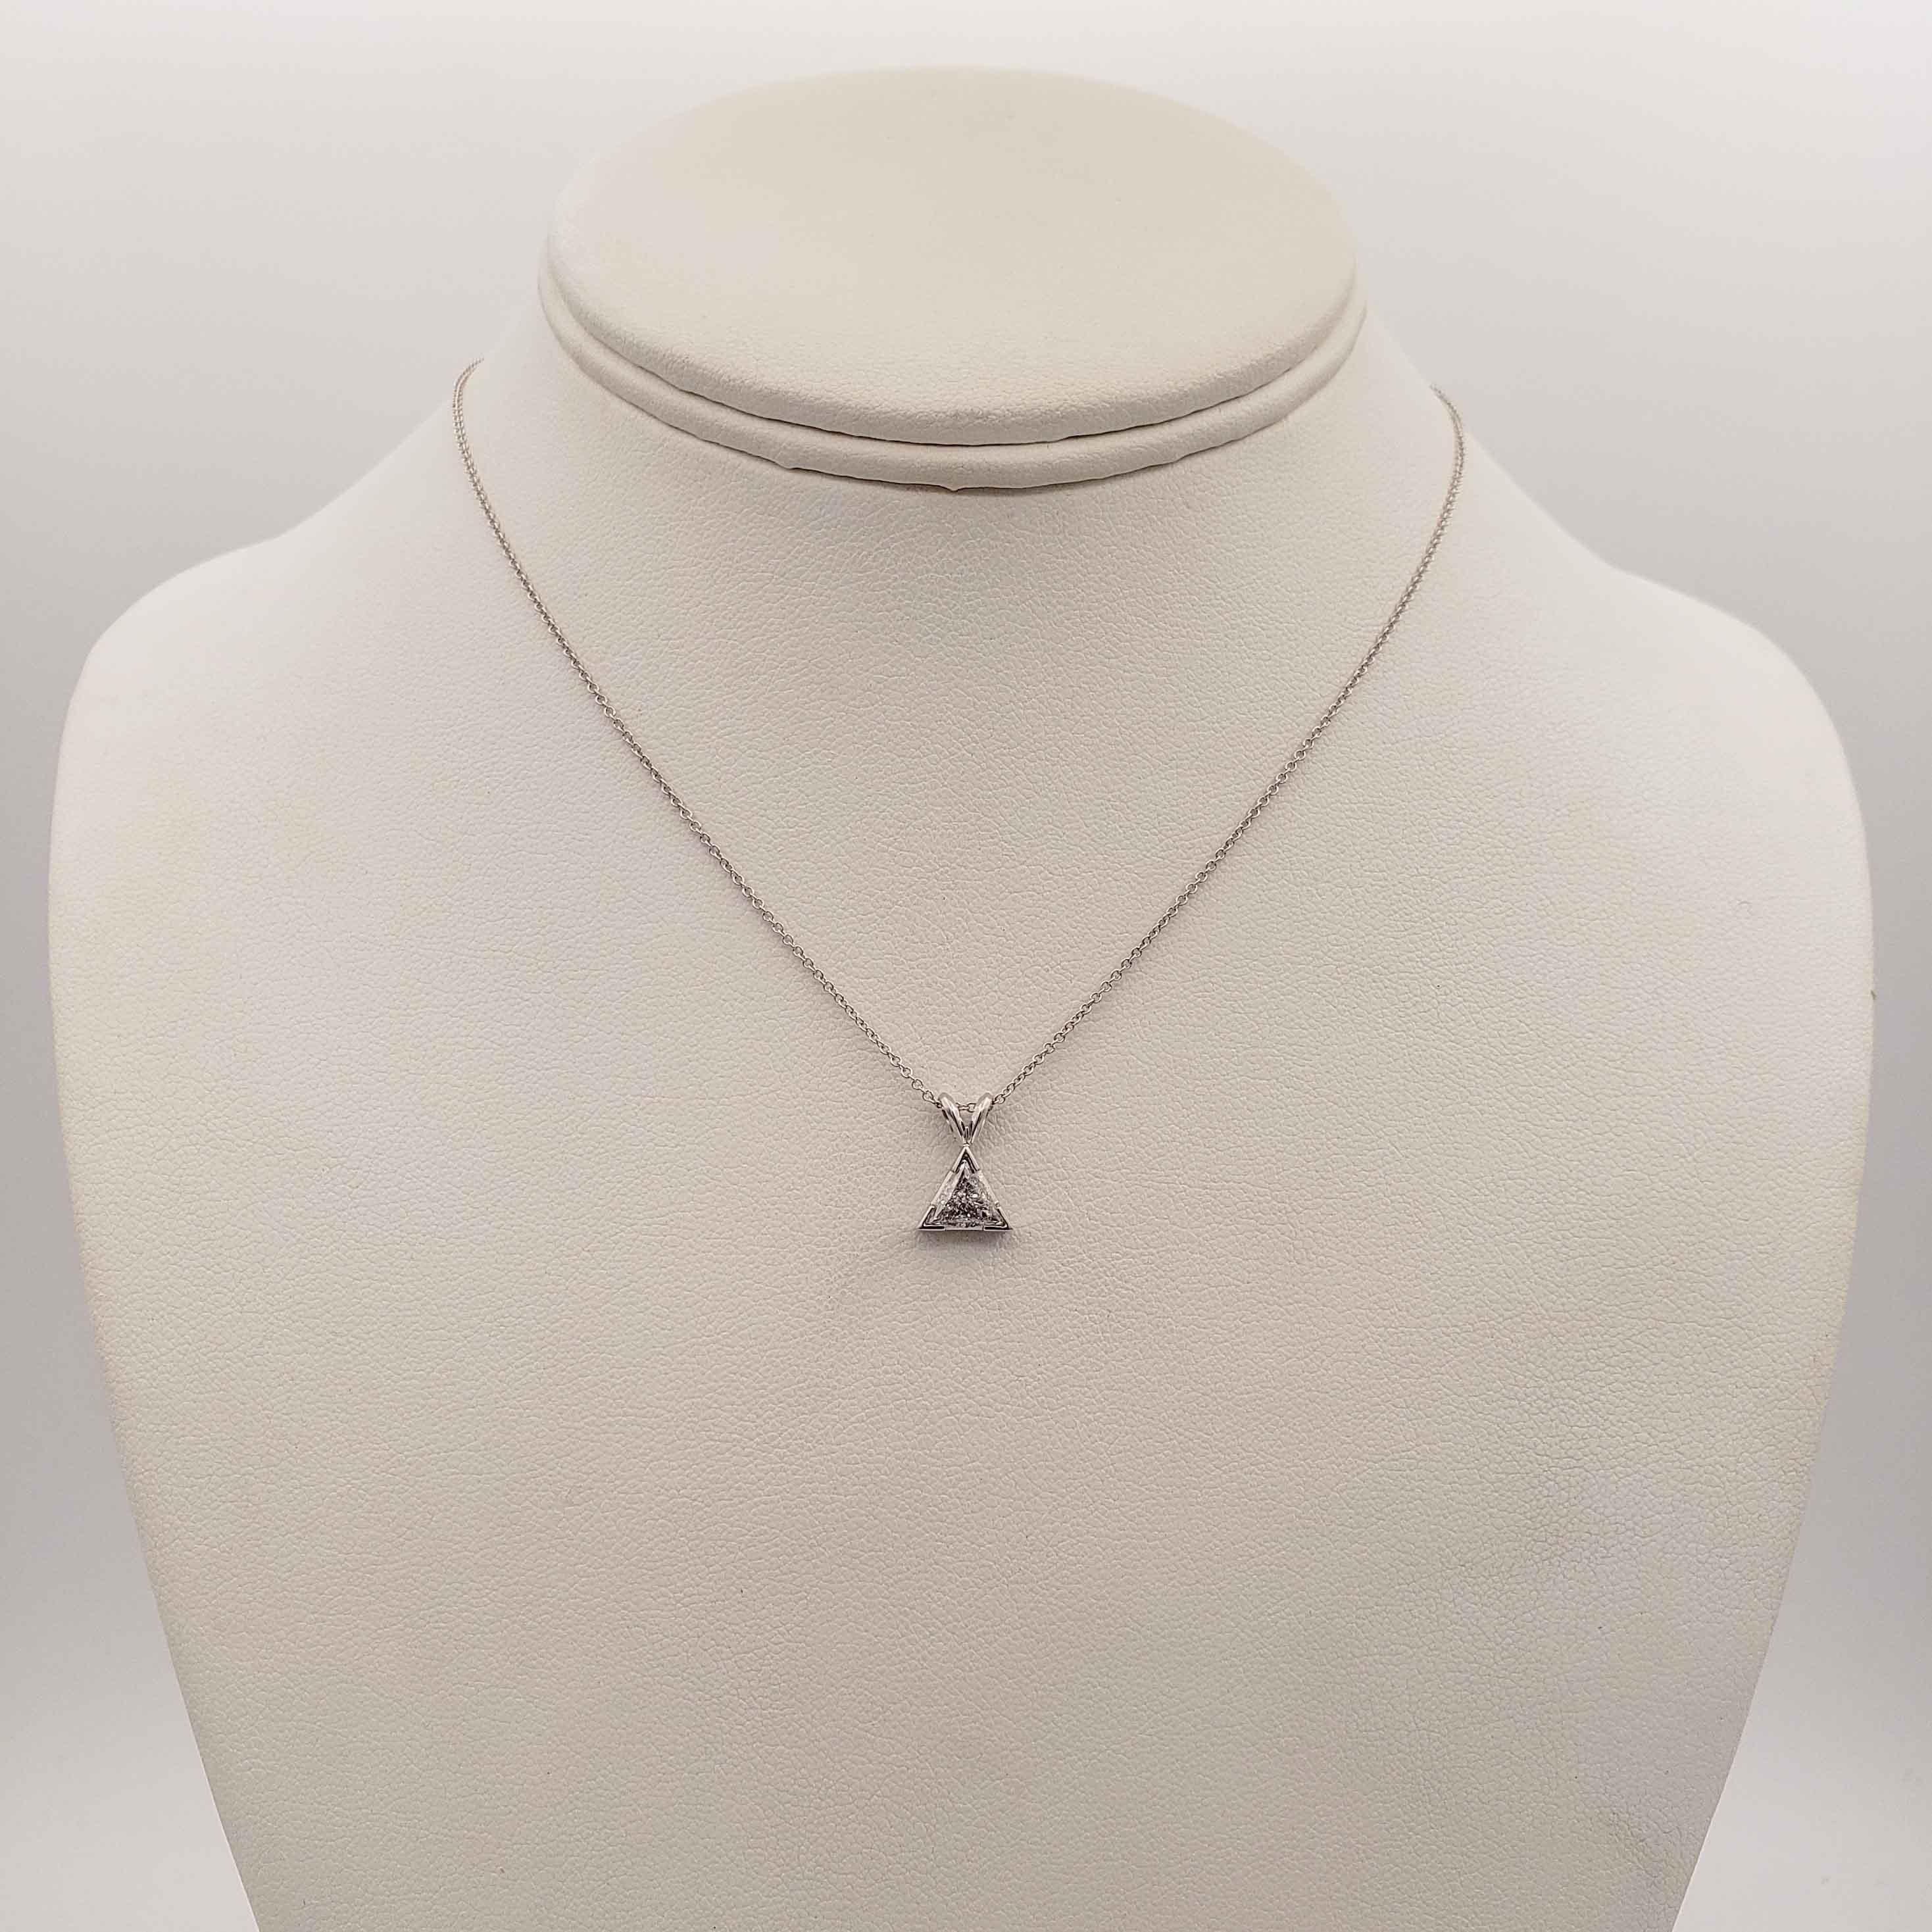 Contemporary Roman Malakov 0.51 Carats Trillion Cut Diamond Solitaire Pendant Necklace For Sale